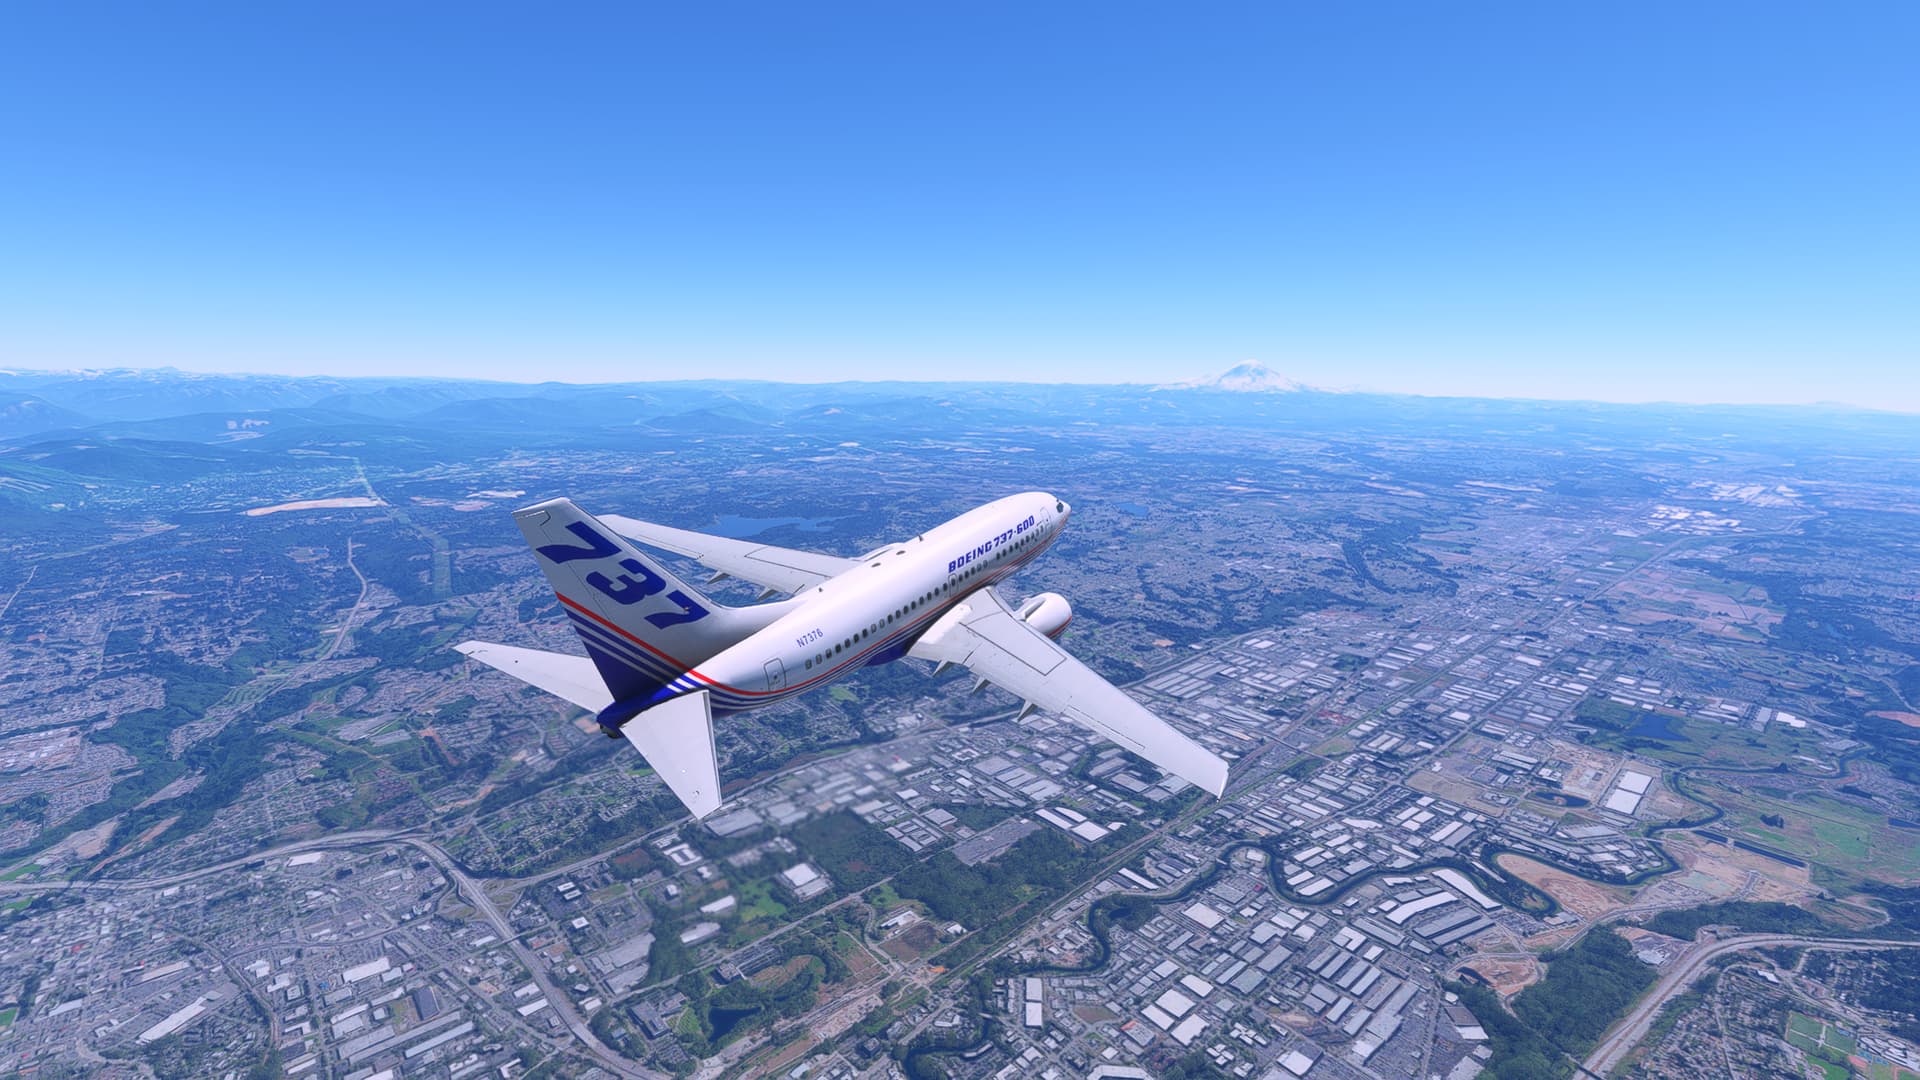 PMDG 737-800 for Microsoft Flight Simulator - PMDG Simulations LLC